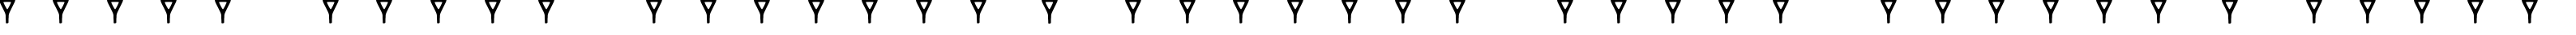 Пример написания шрифтом RK Ugaritic текста на белорусском